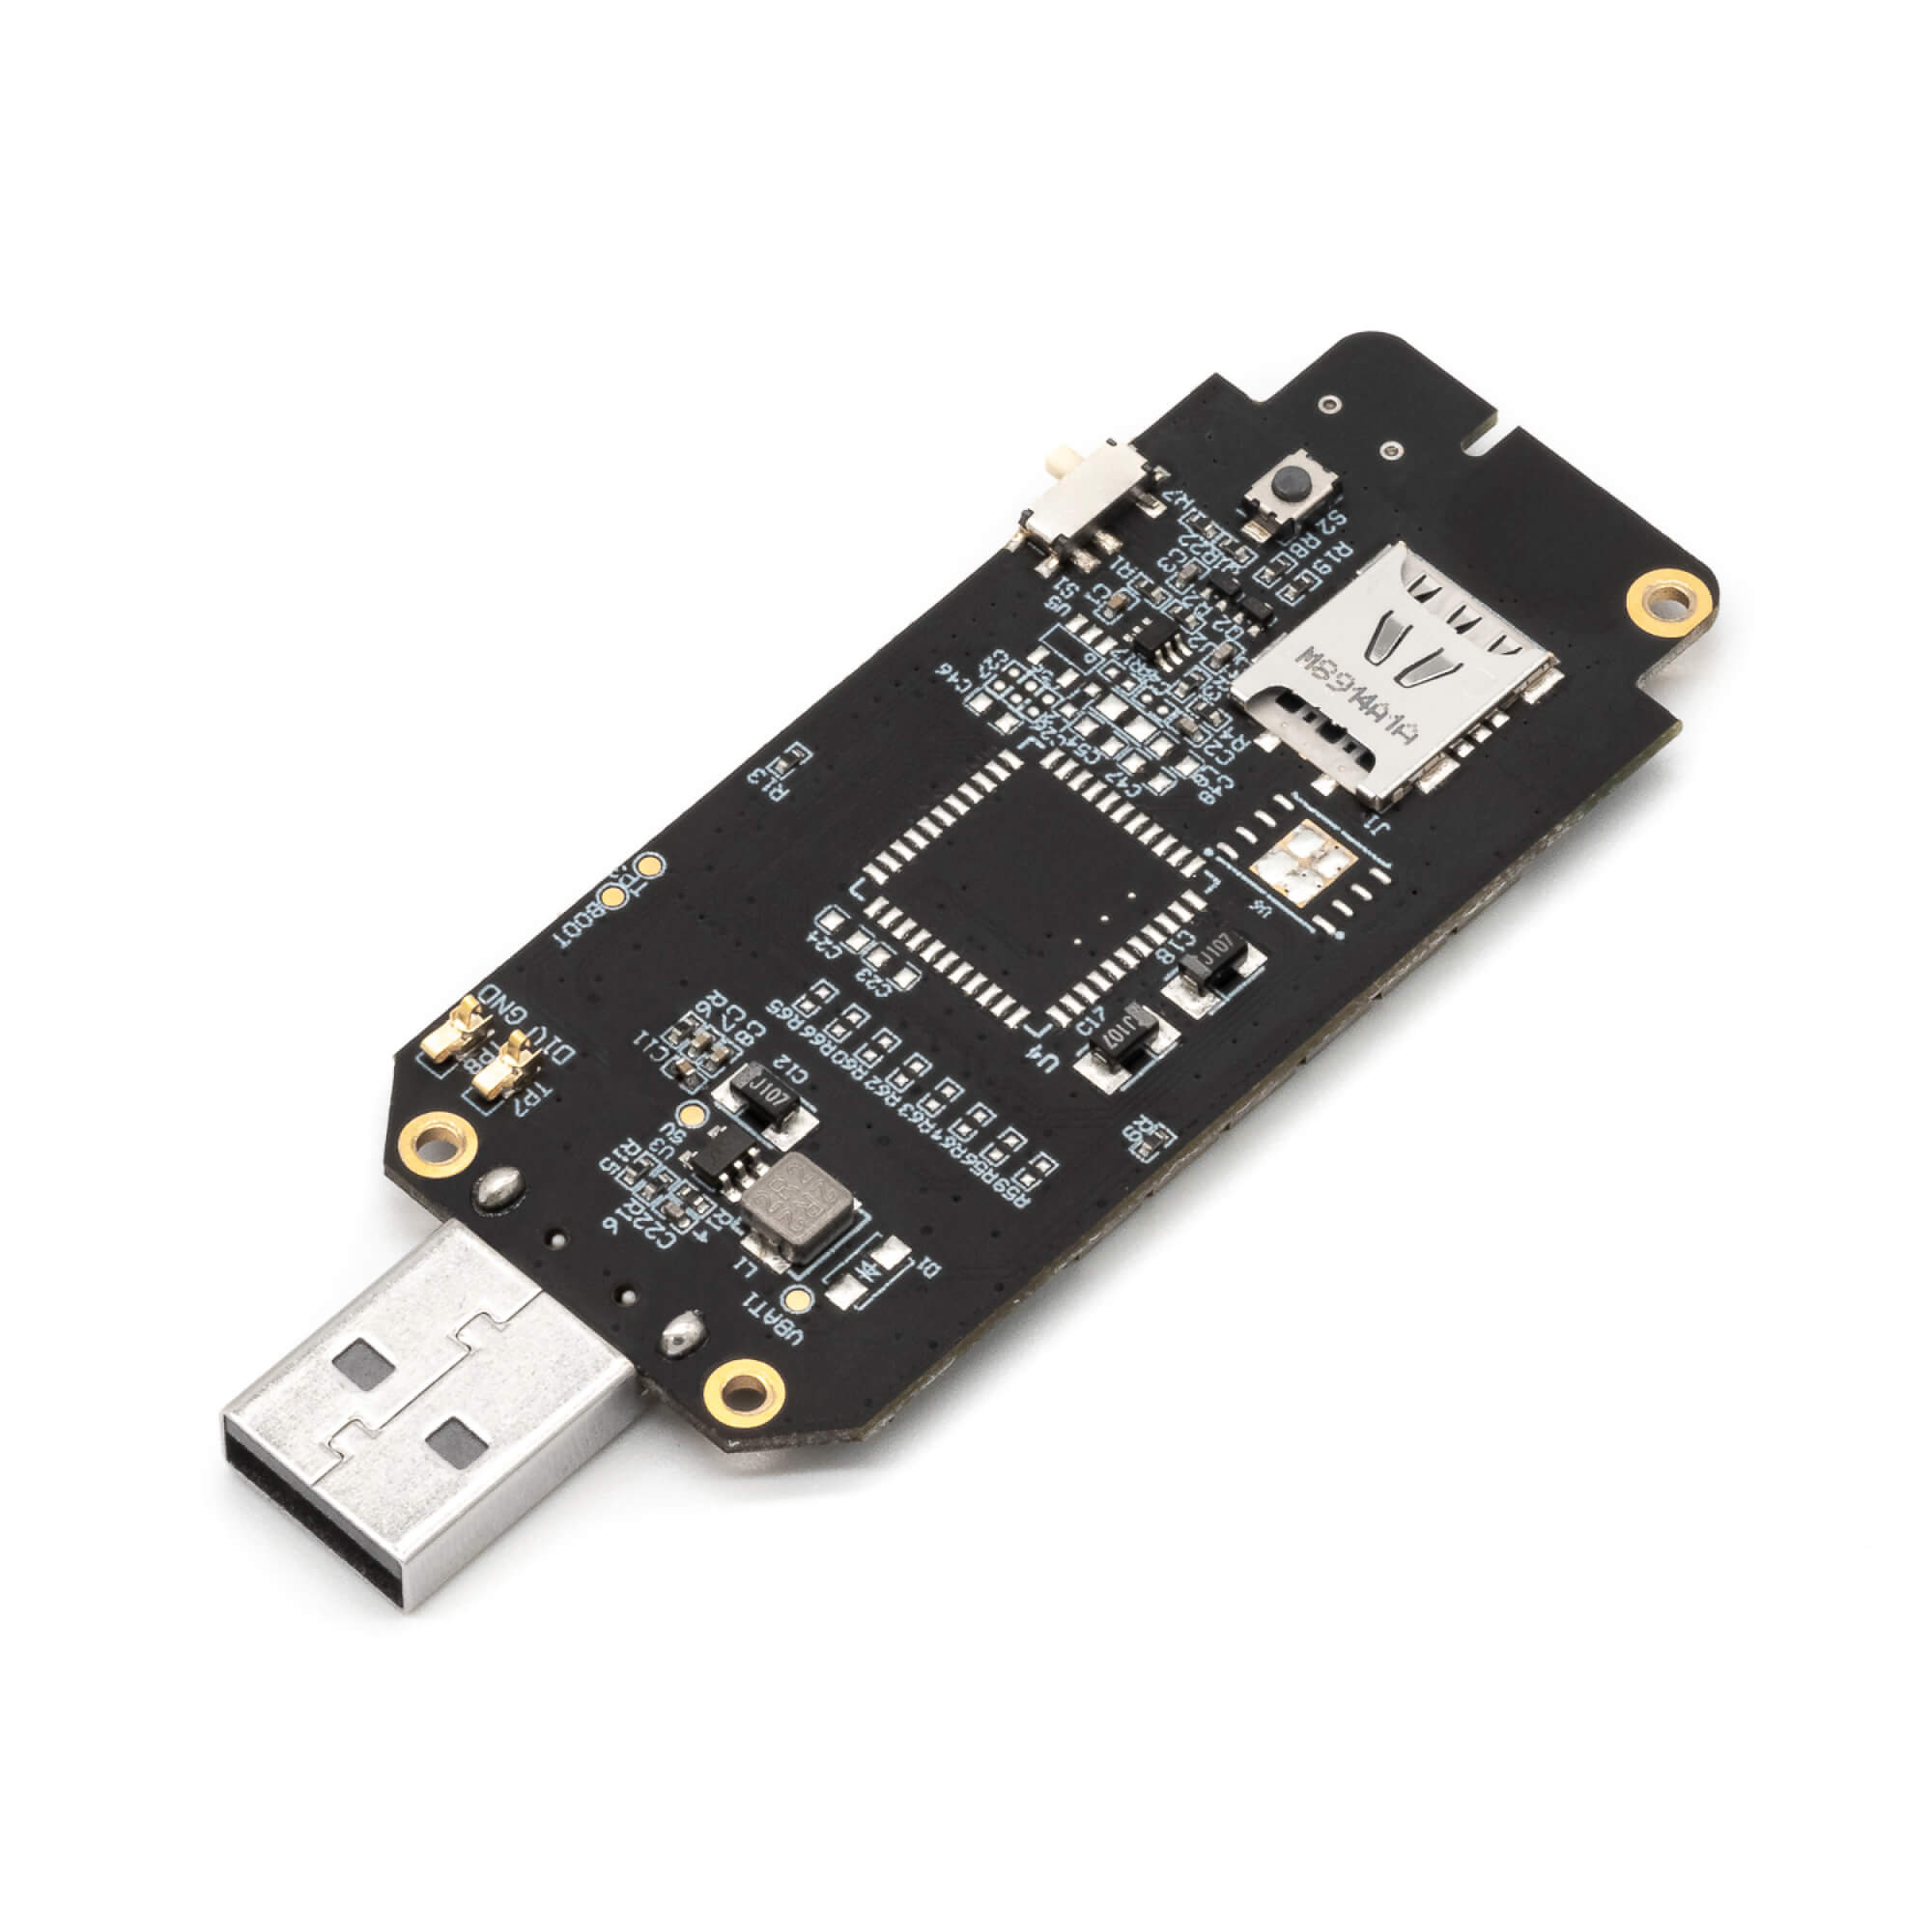 Soracom Onyx LTE USB Dongle + IoT SIM + Connectivity